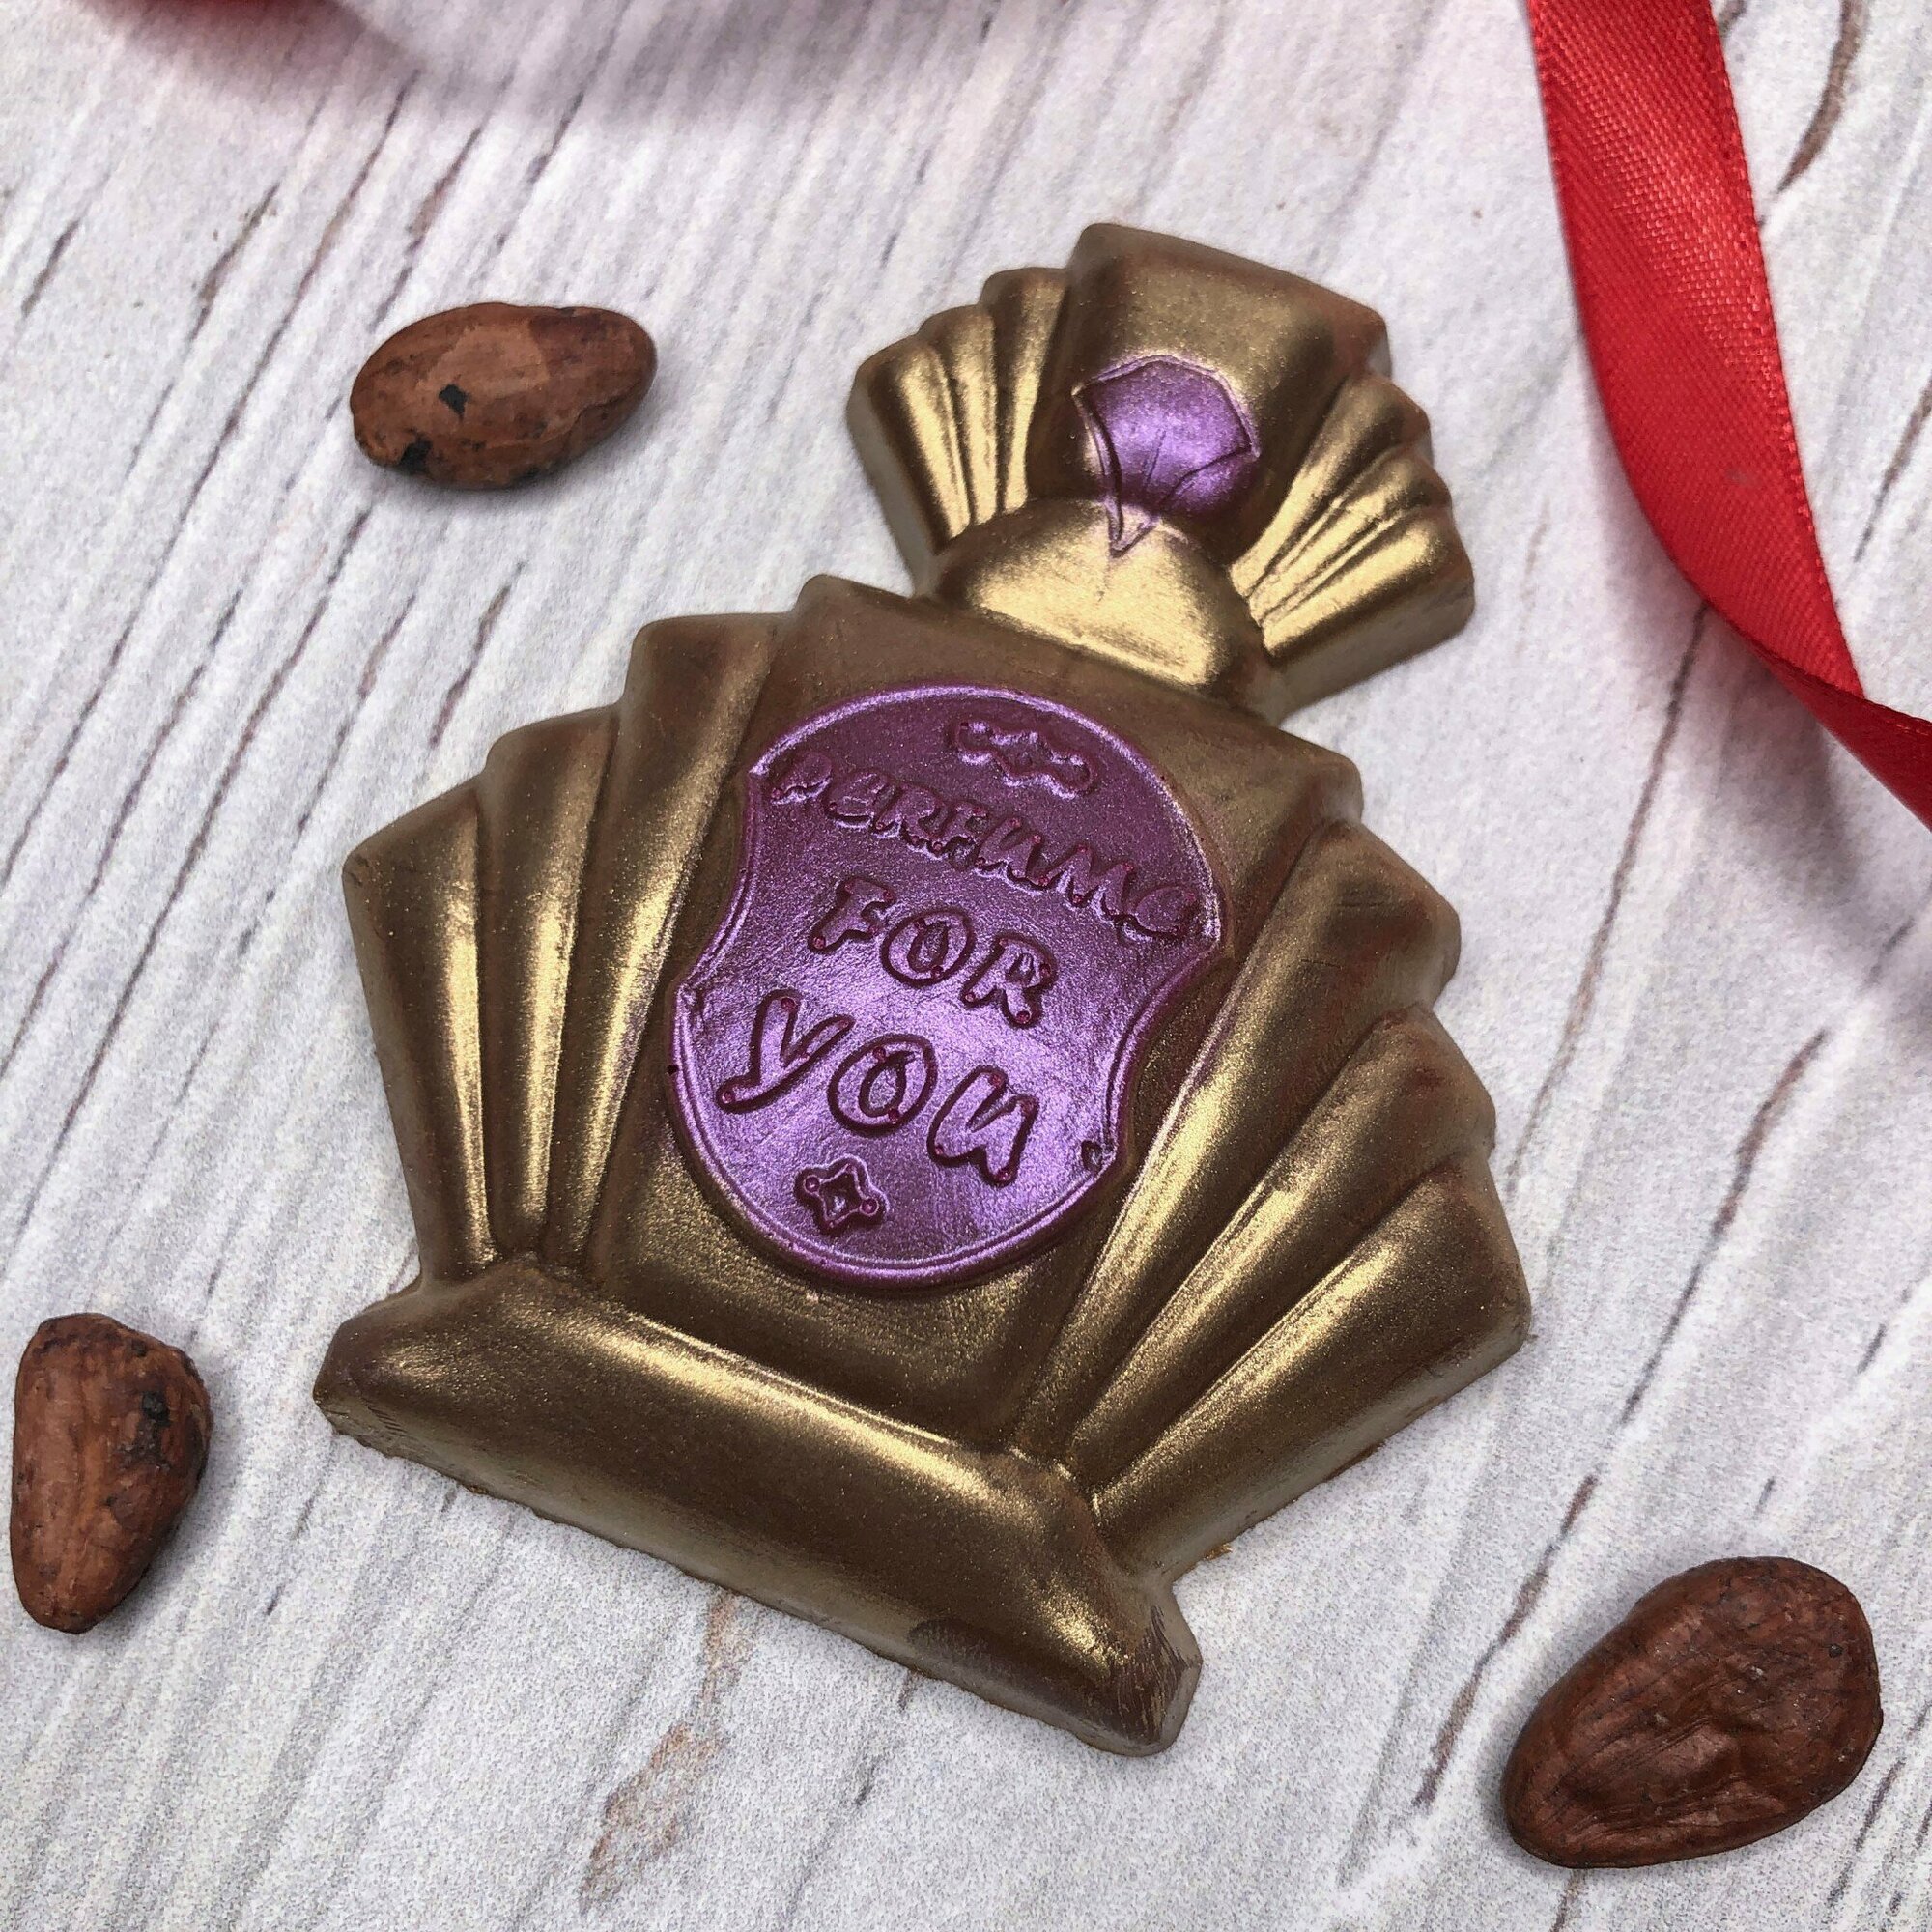 Шоколадная фигурка из бельгийского шоколада "Шоколадный набор "Женский" № 1 стандарт"